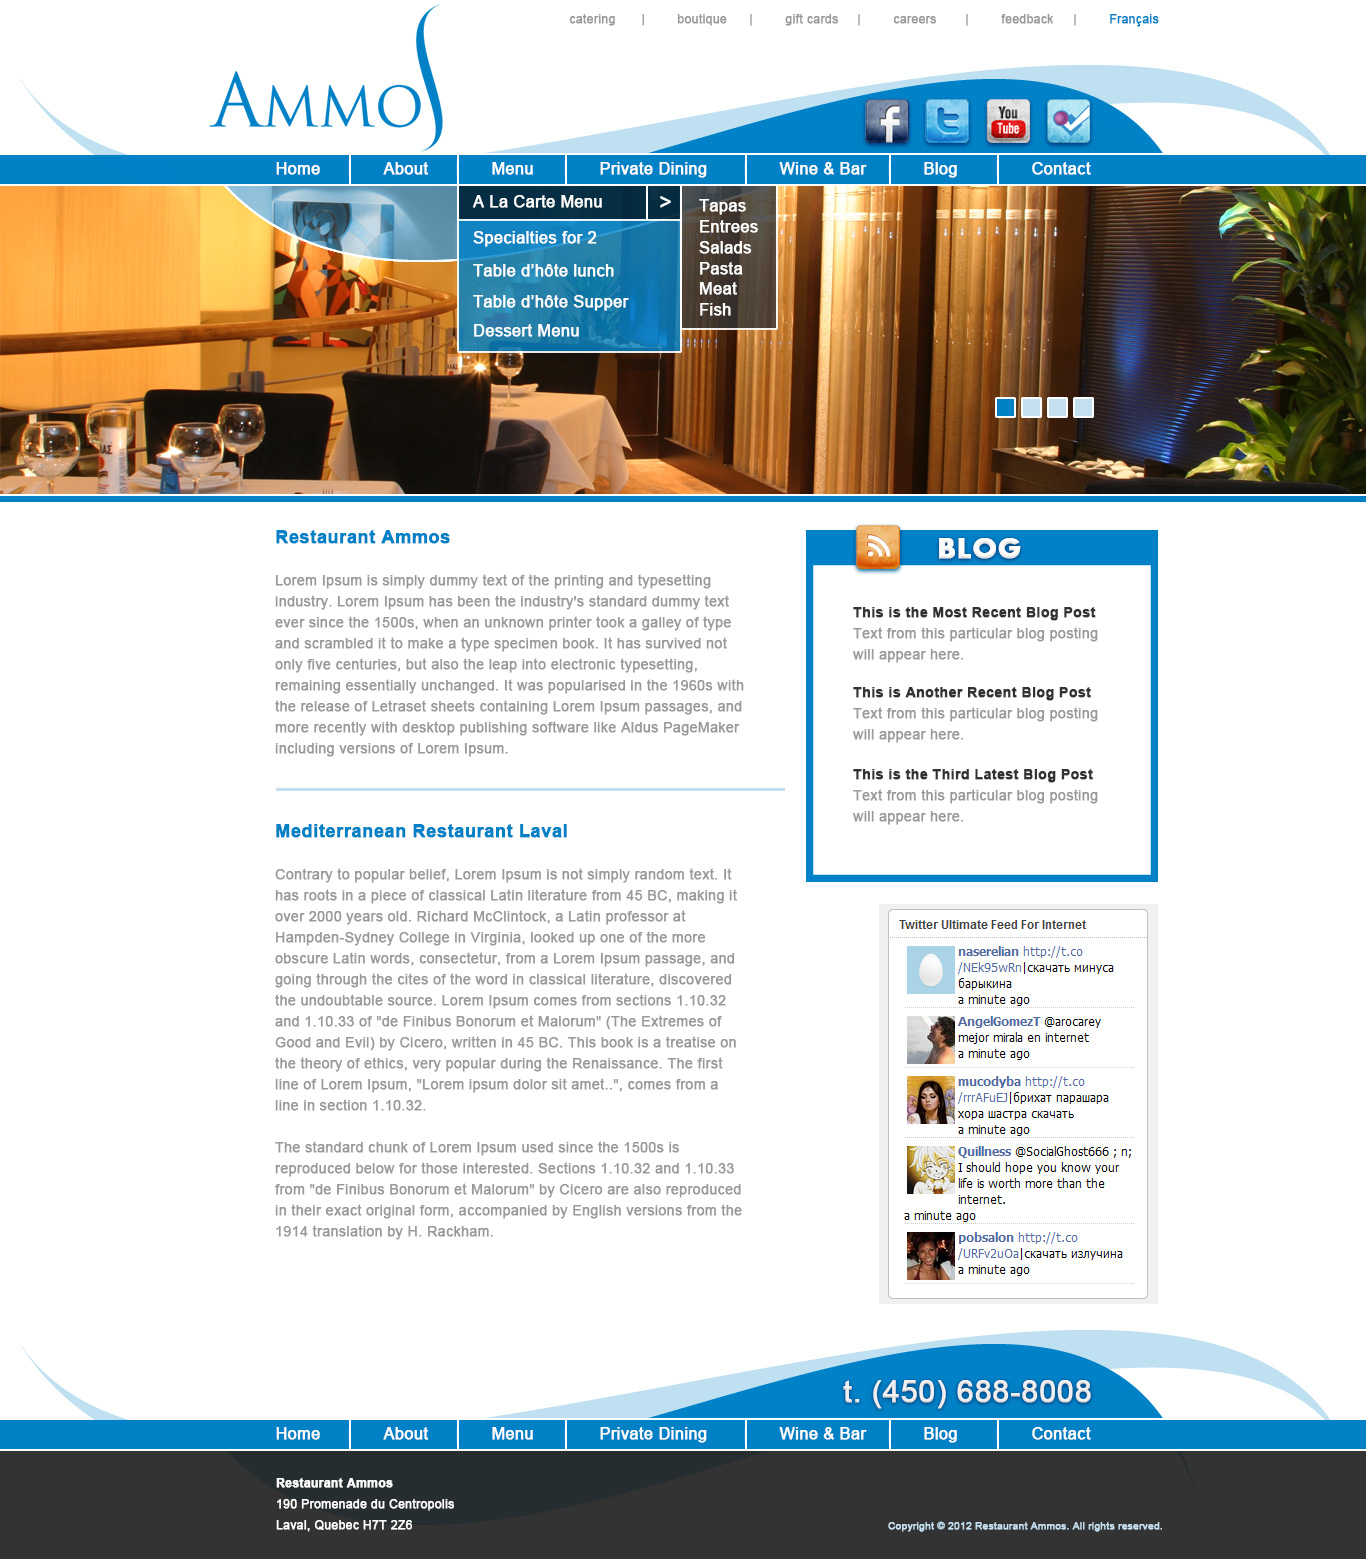 Ammos Website Design & Development